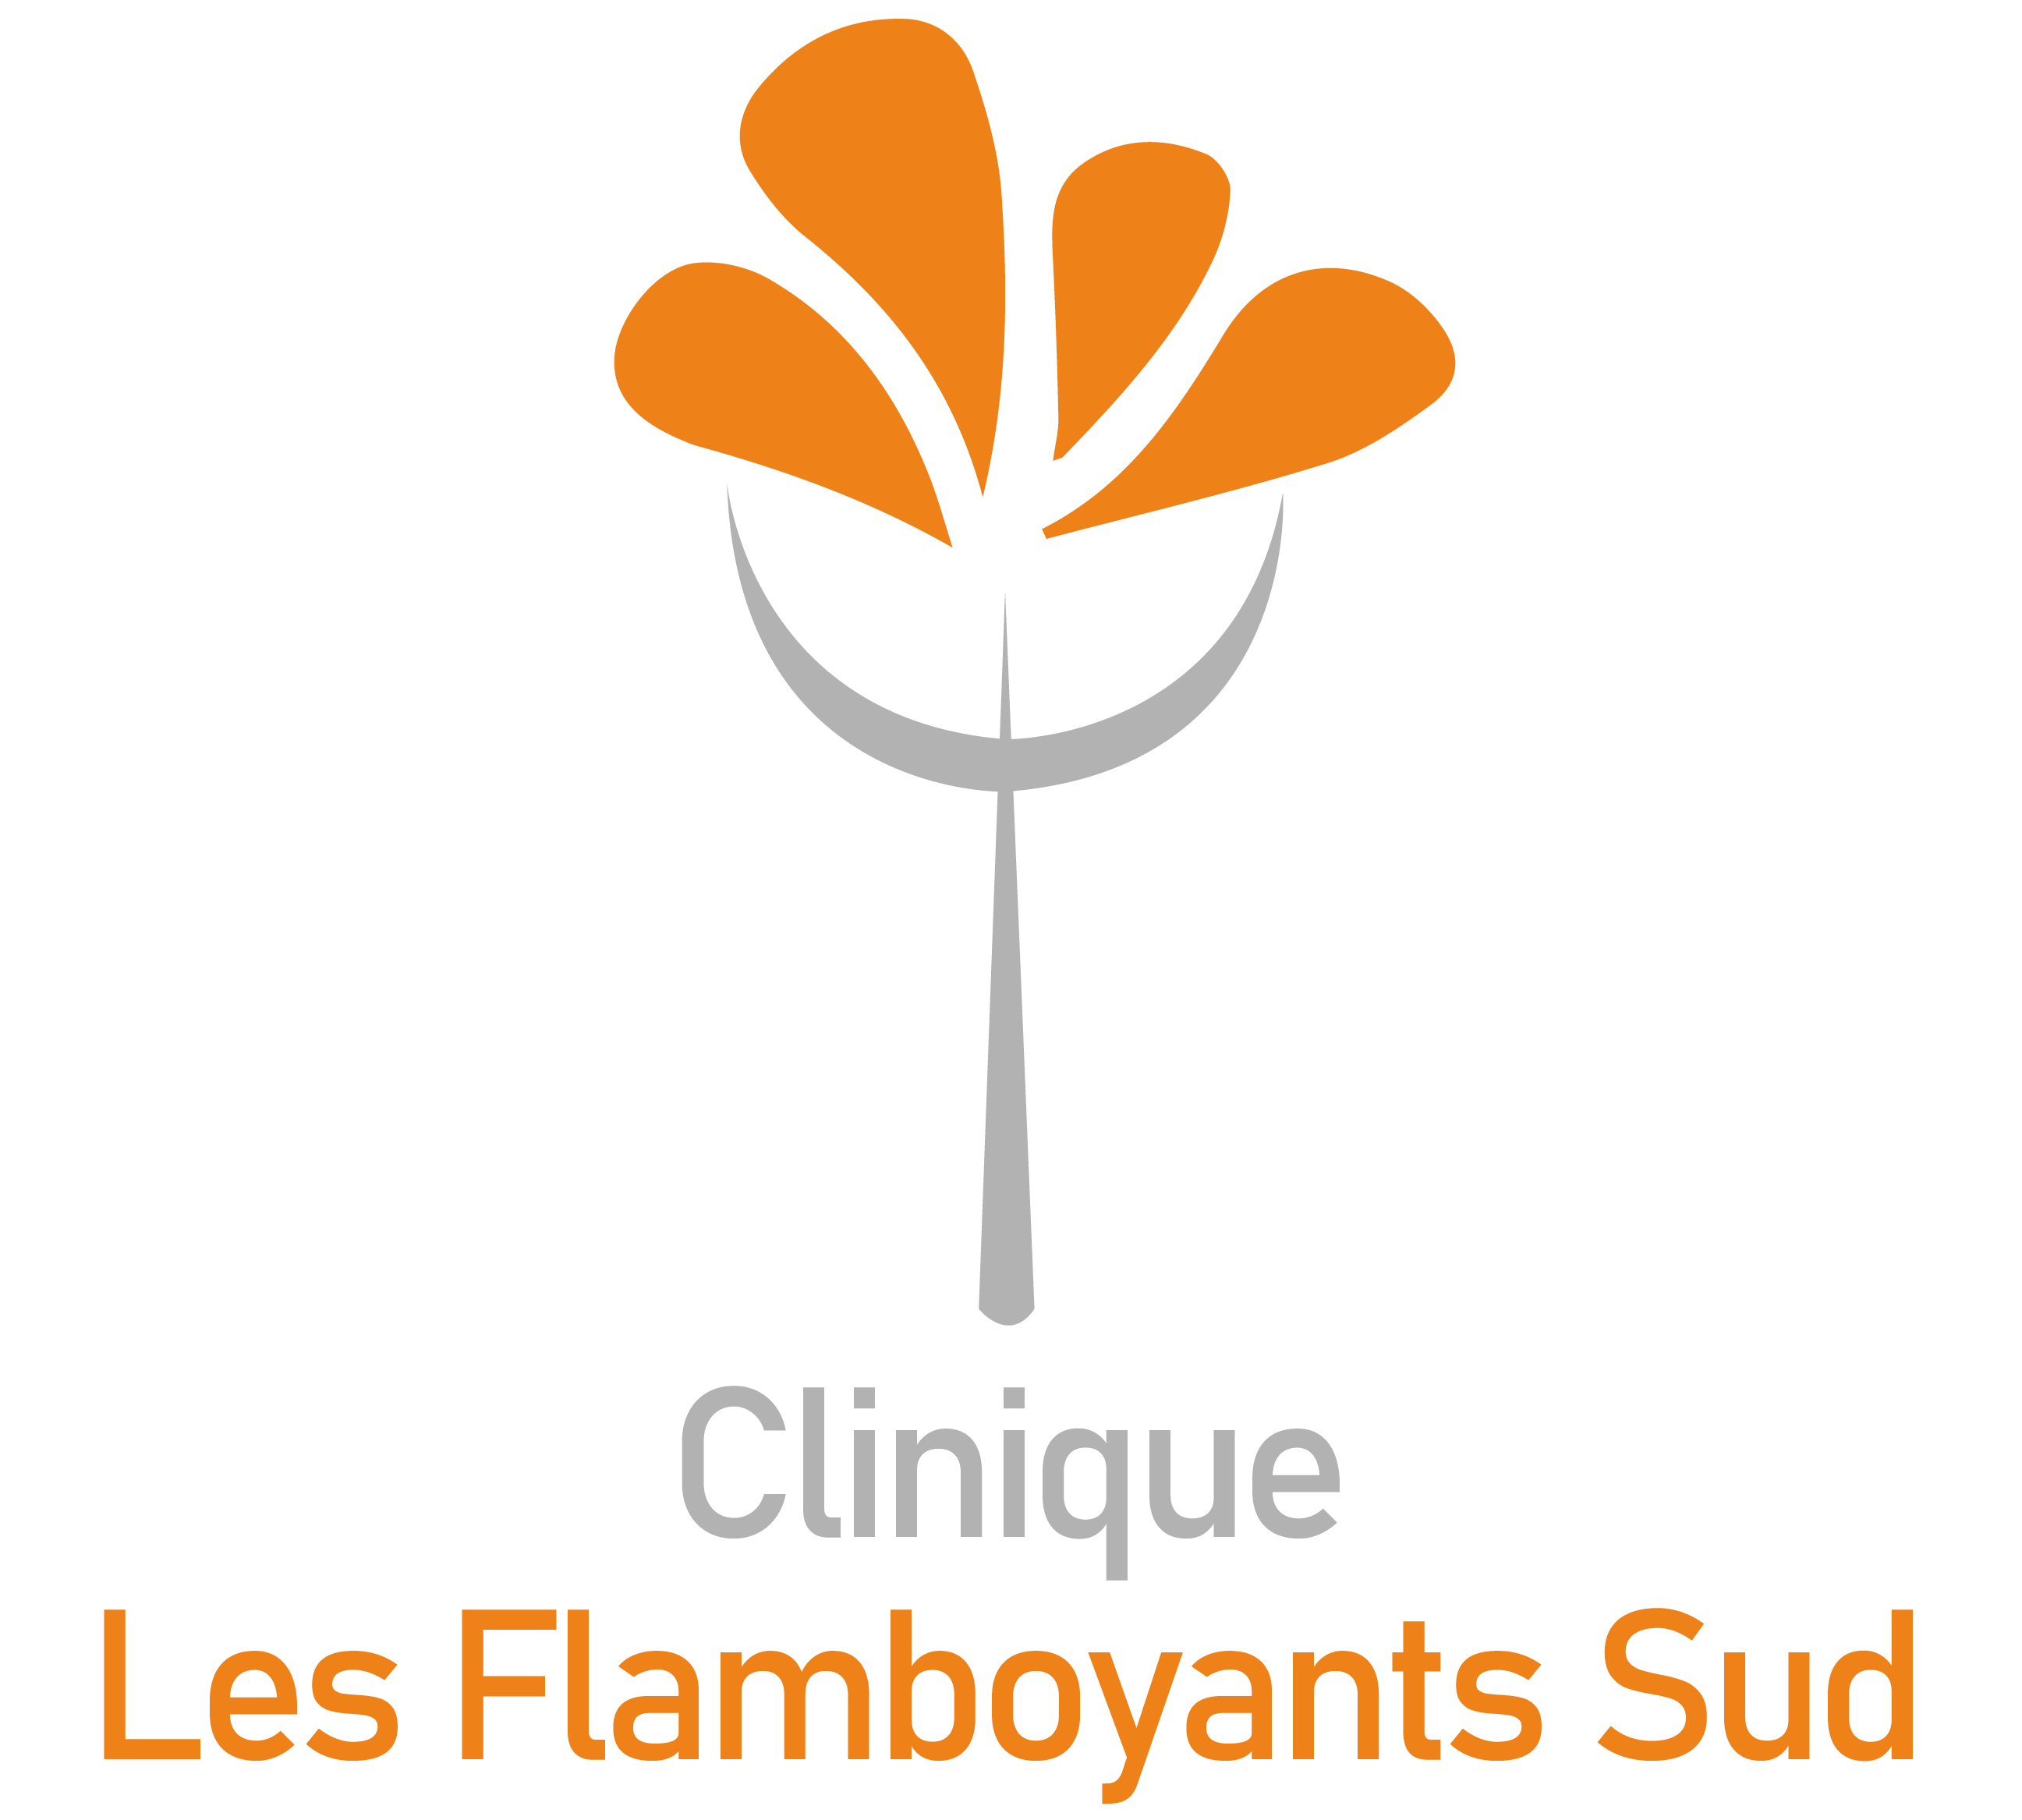 Clinique Les Flamboyants Sud